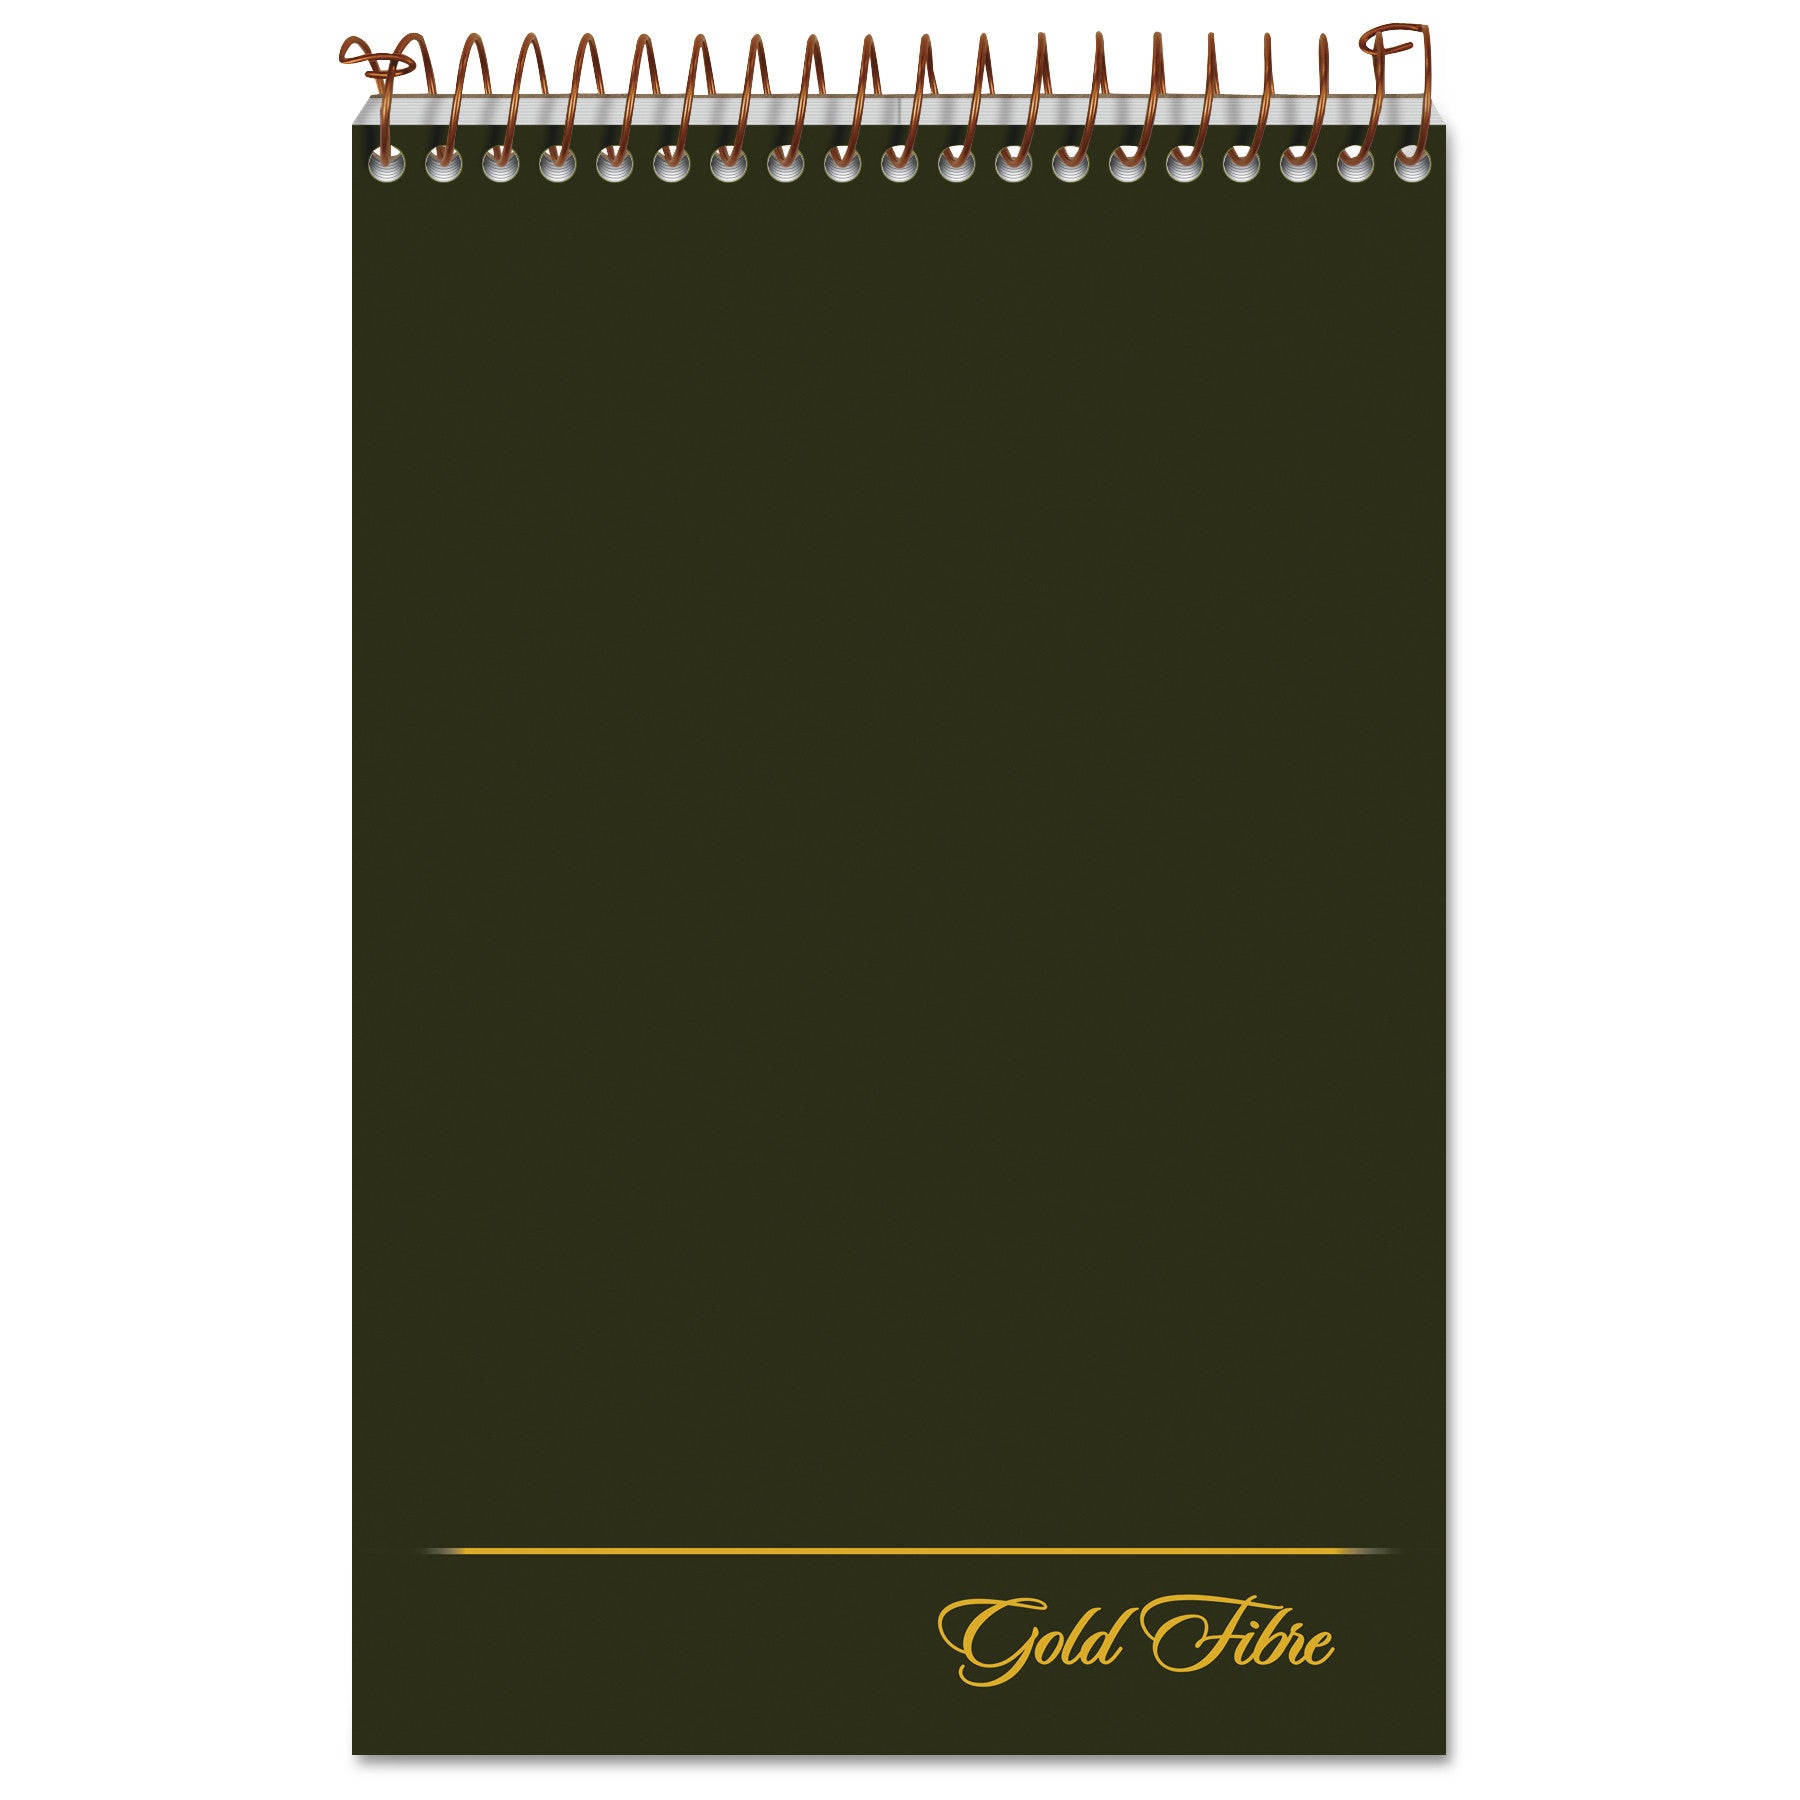 Gold Fibre Steno Pads, Gregg Rule, Designer Green/Gold Cover, 100 White 6 x 9 Sheets - 